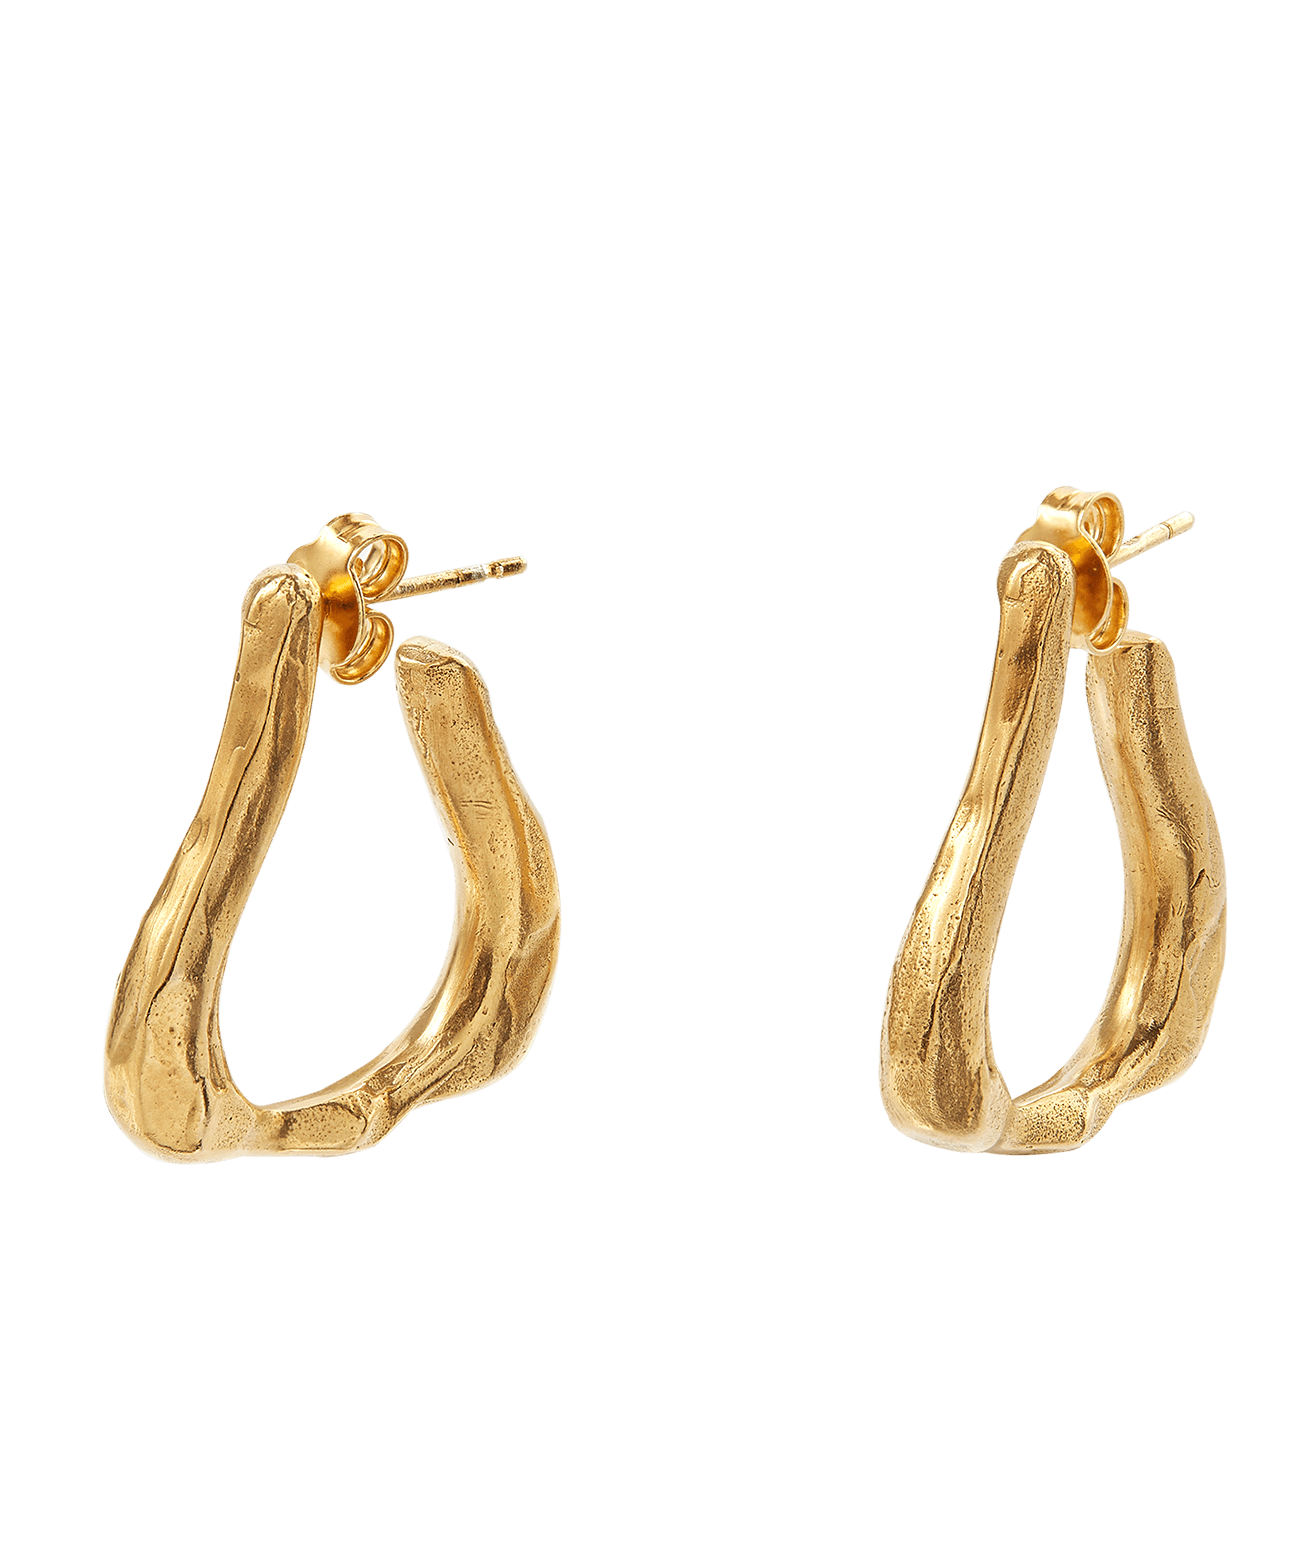 18k Gold Filled Chain Hoop Earrings Gold Mini Link Hoops 